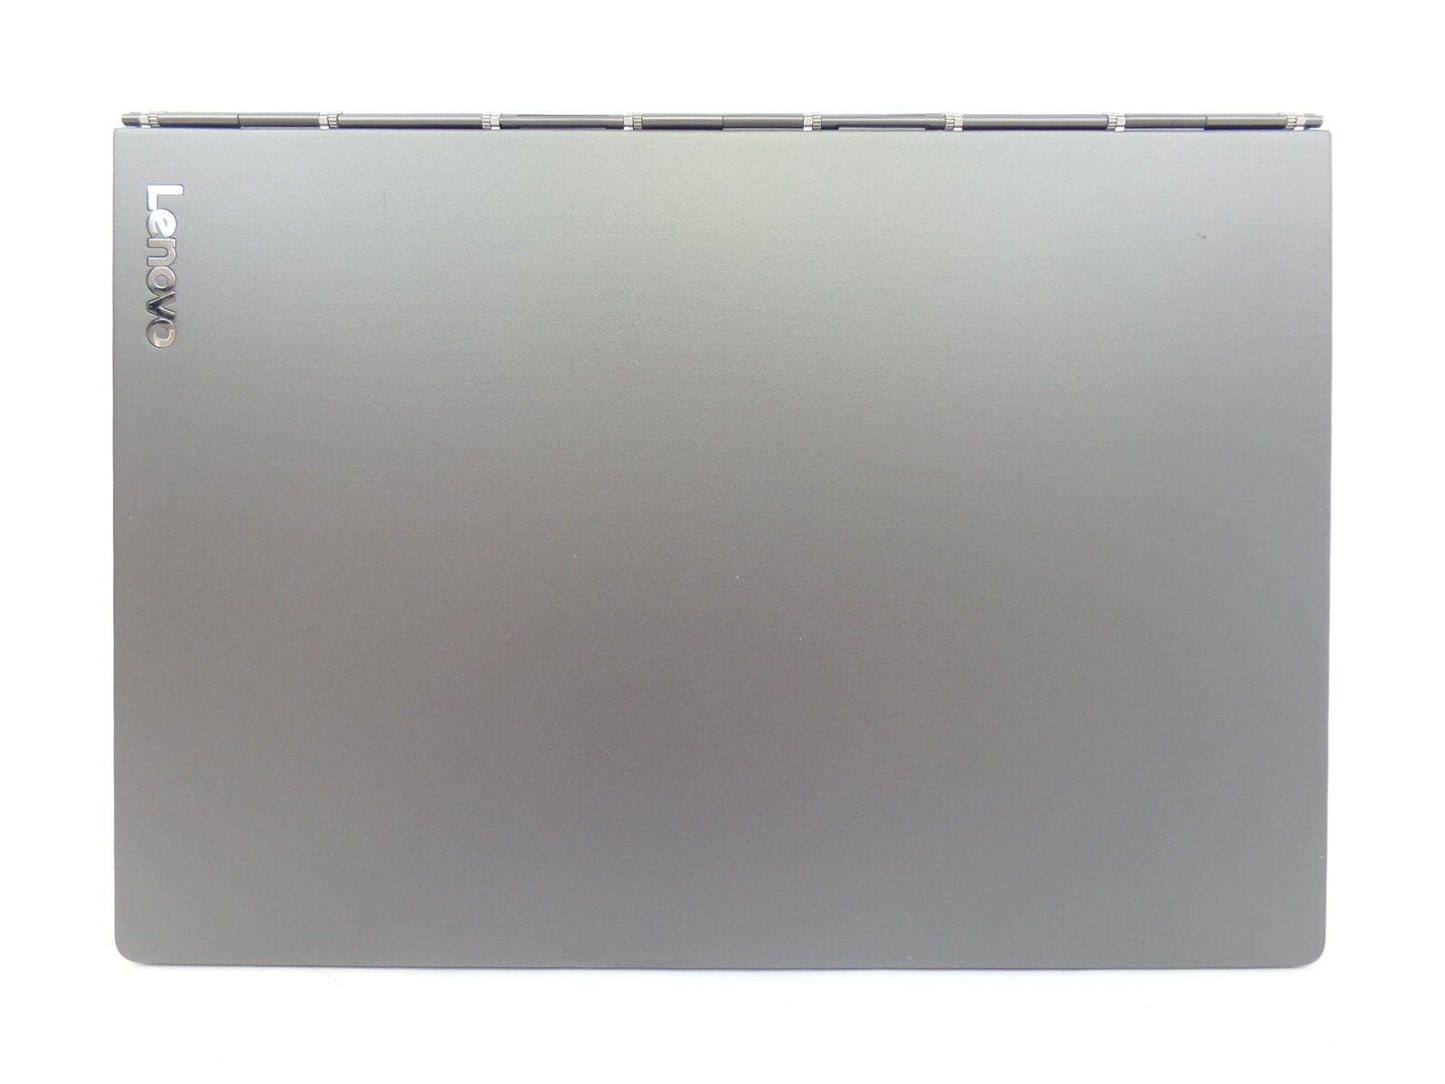 Lenovo Yoga Book C930 10.8" WQXGA Touch i5-7Y54 4GB 256GB W10H Laptop